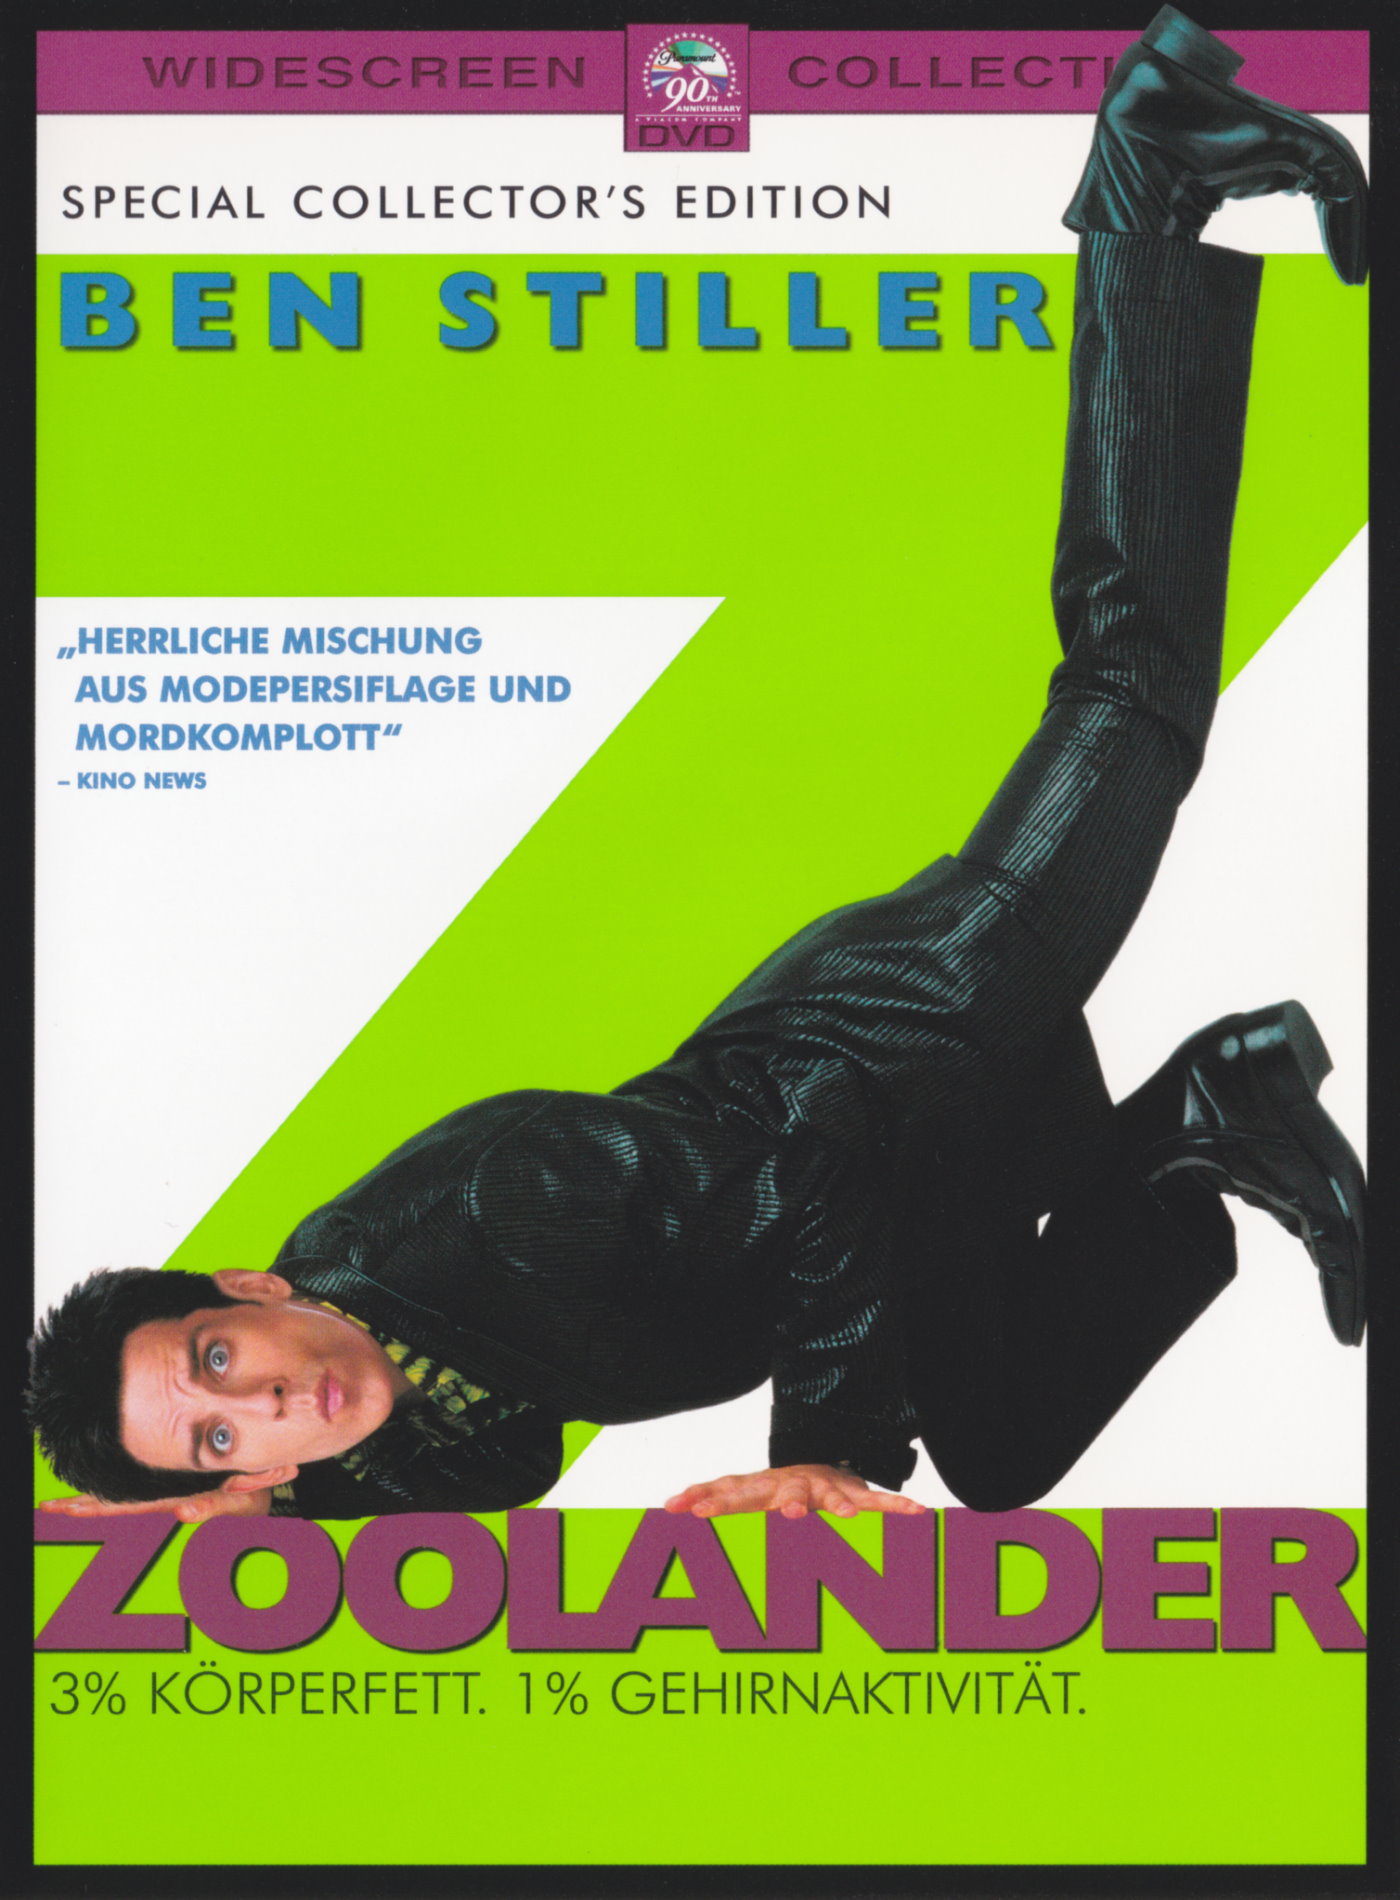 Cover - Zoolander.jpg